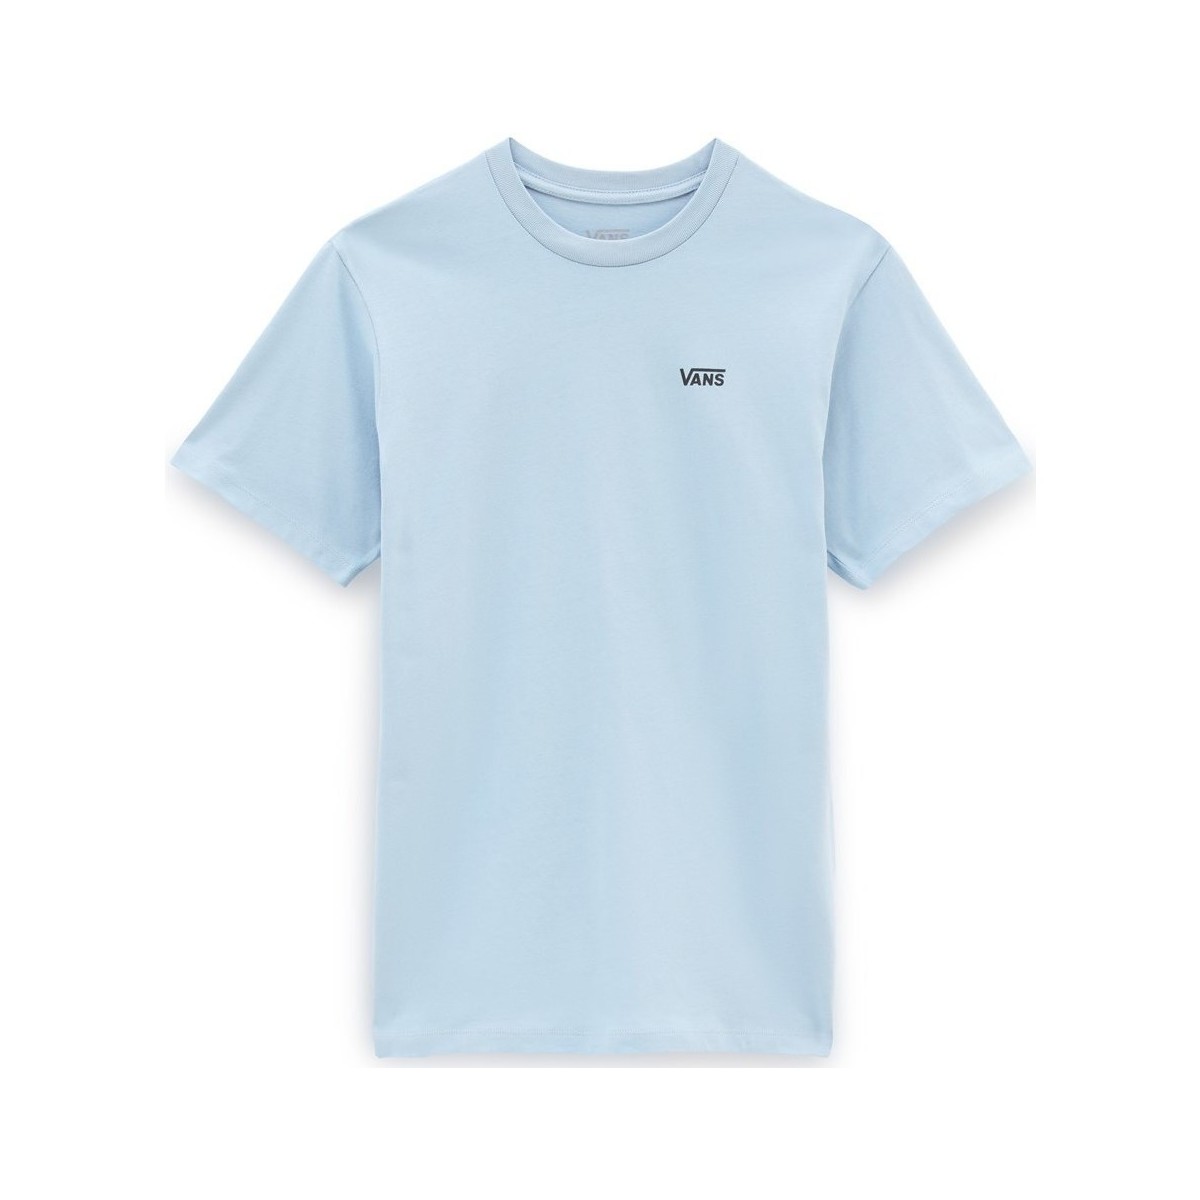 Textil Ženy Trička s krátkým rukávem Vans Left Chest Logo Tee Modrá